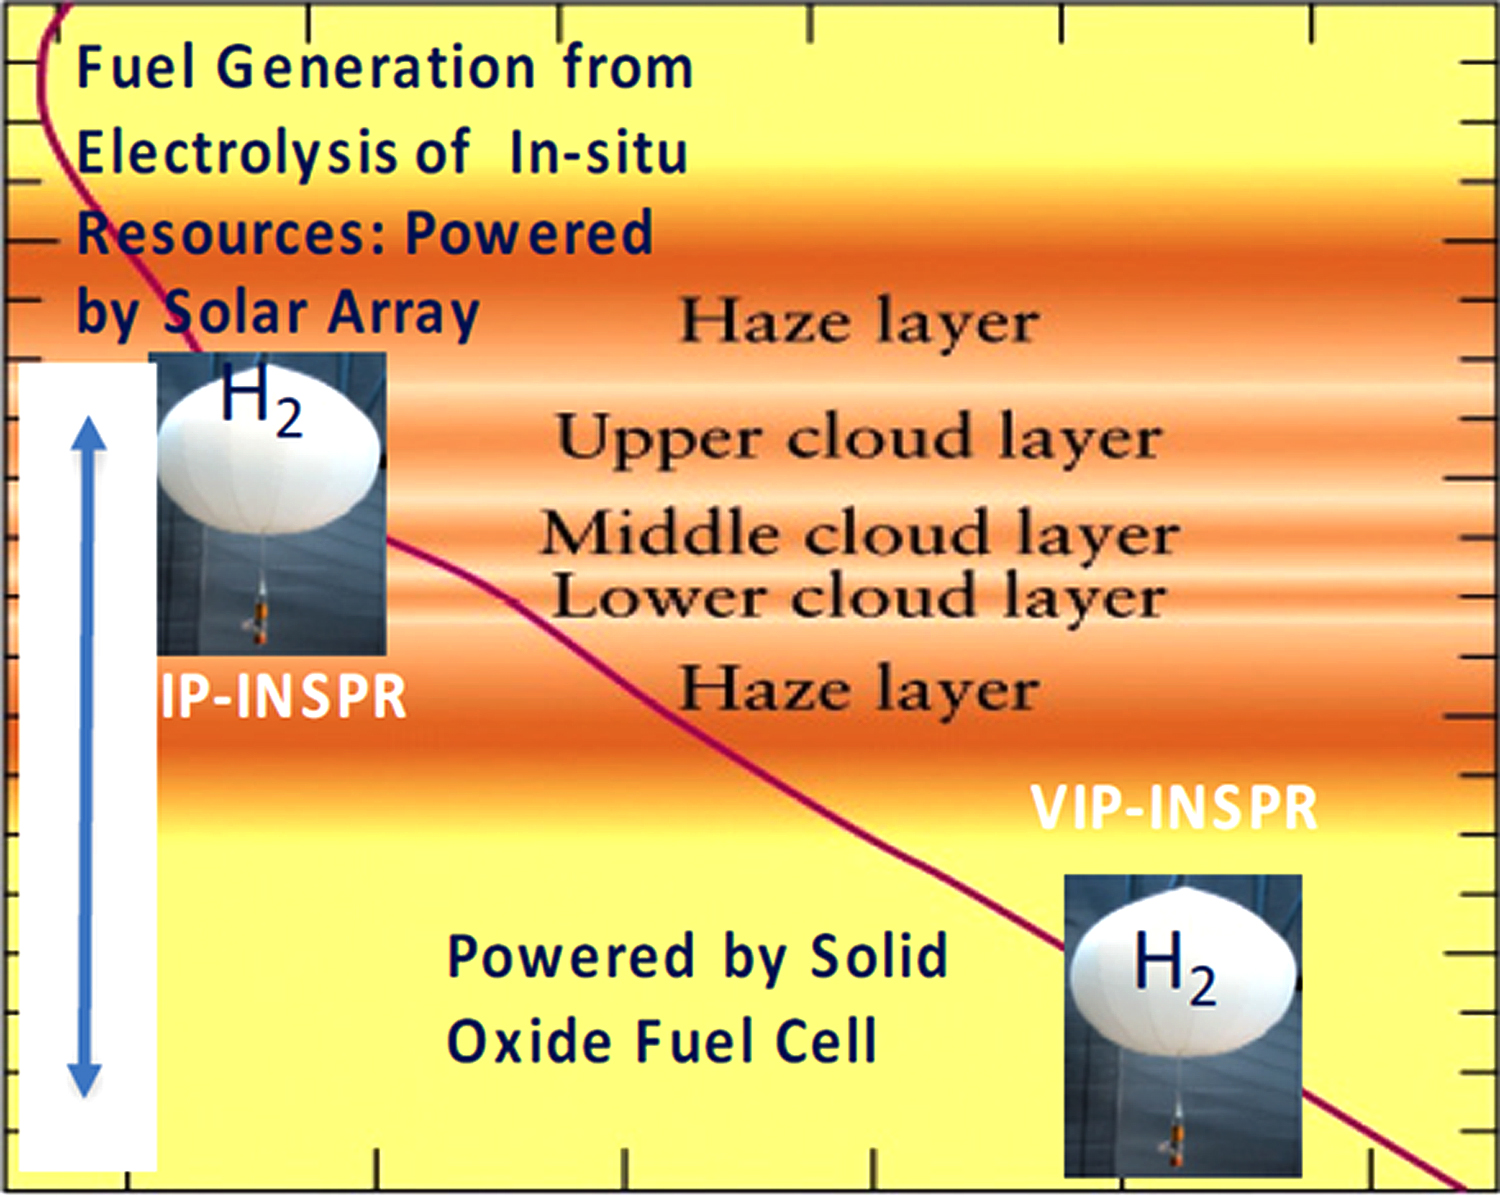 In-situ Power and Propulsion Diagram